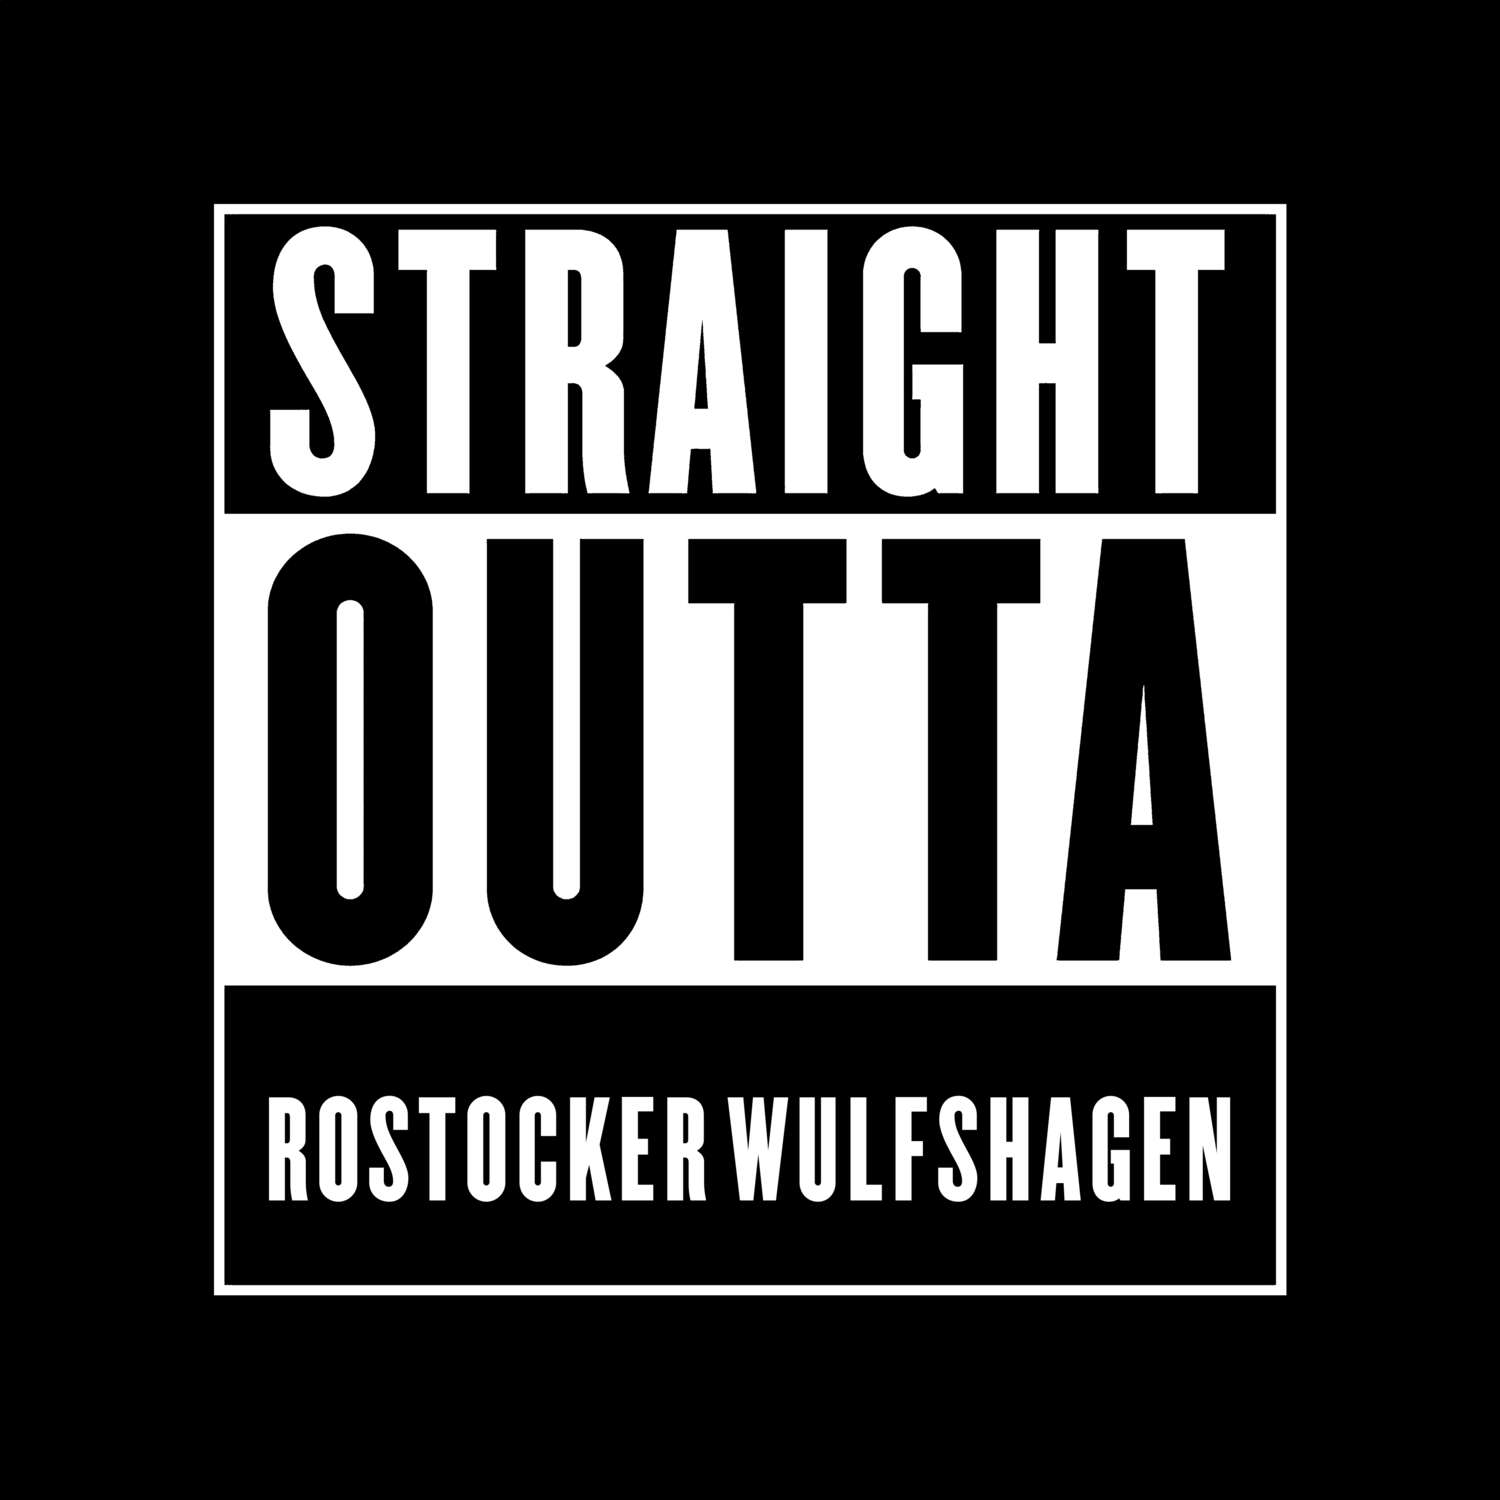 Rostocker Wulfshagen T-Shirt »Straight Outta«